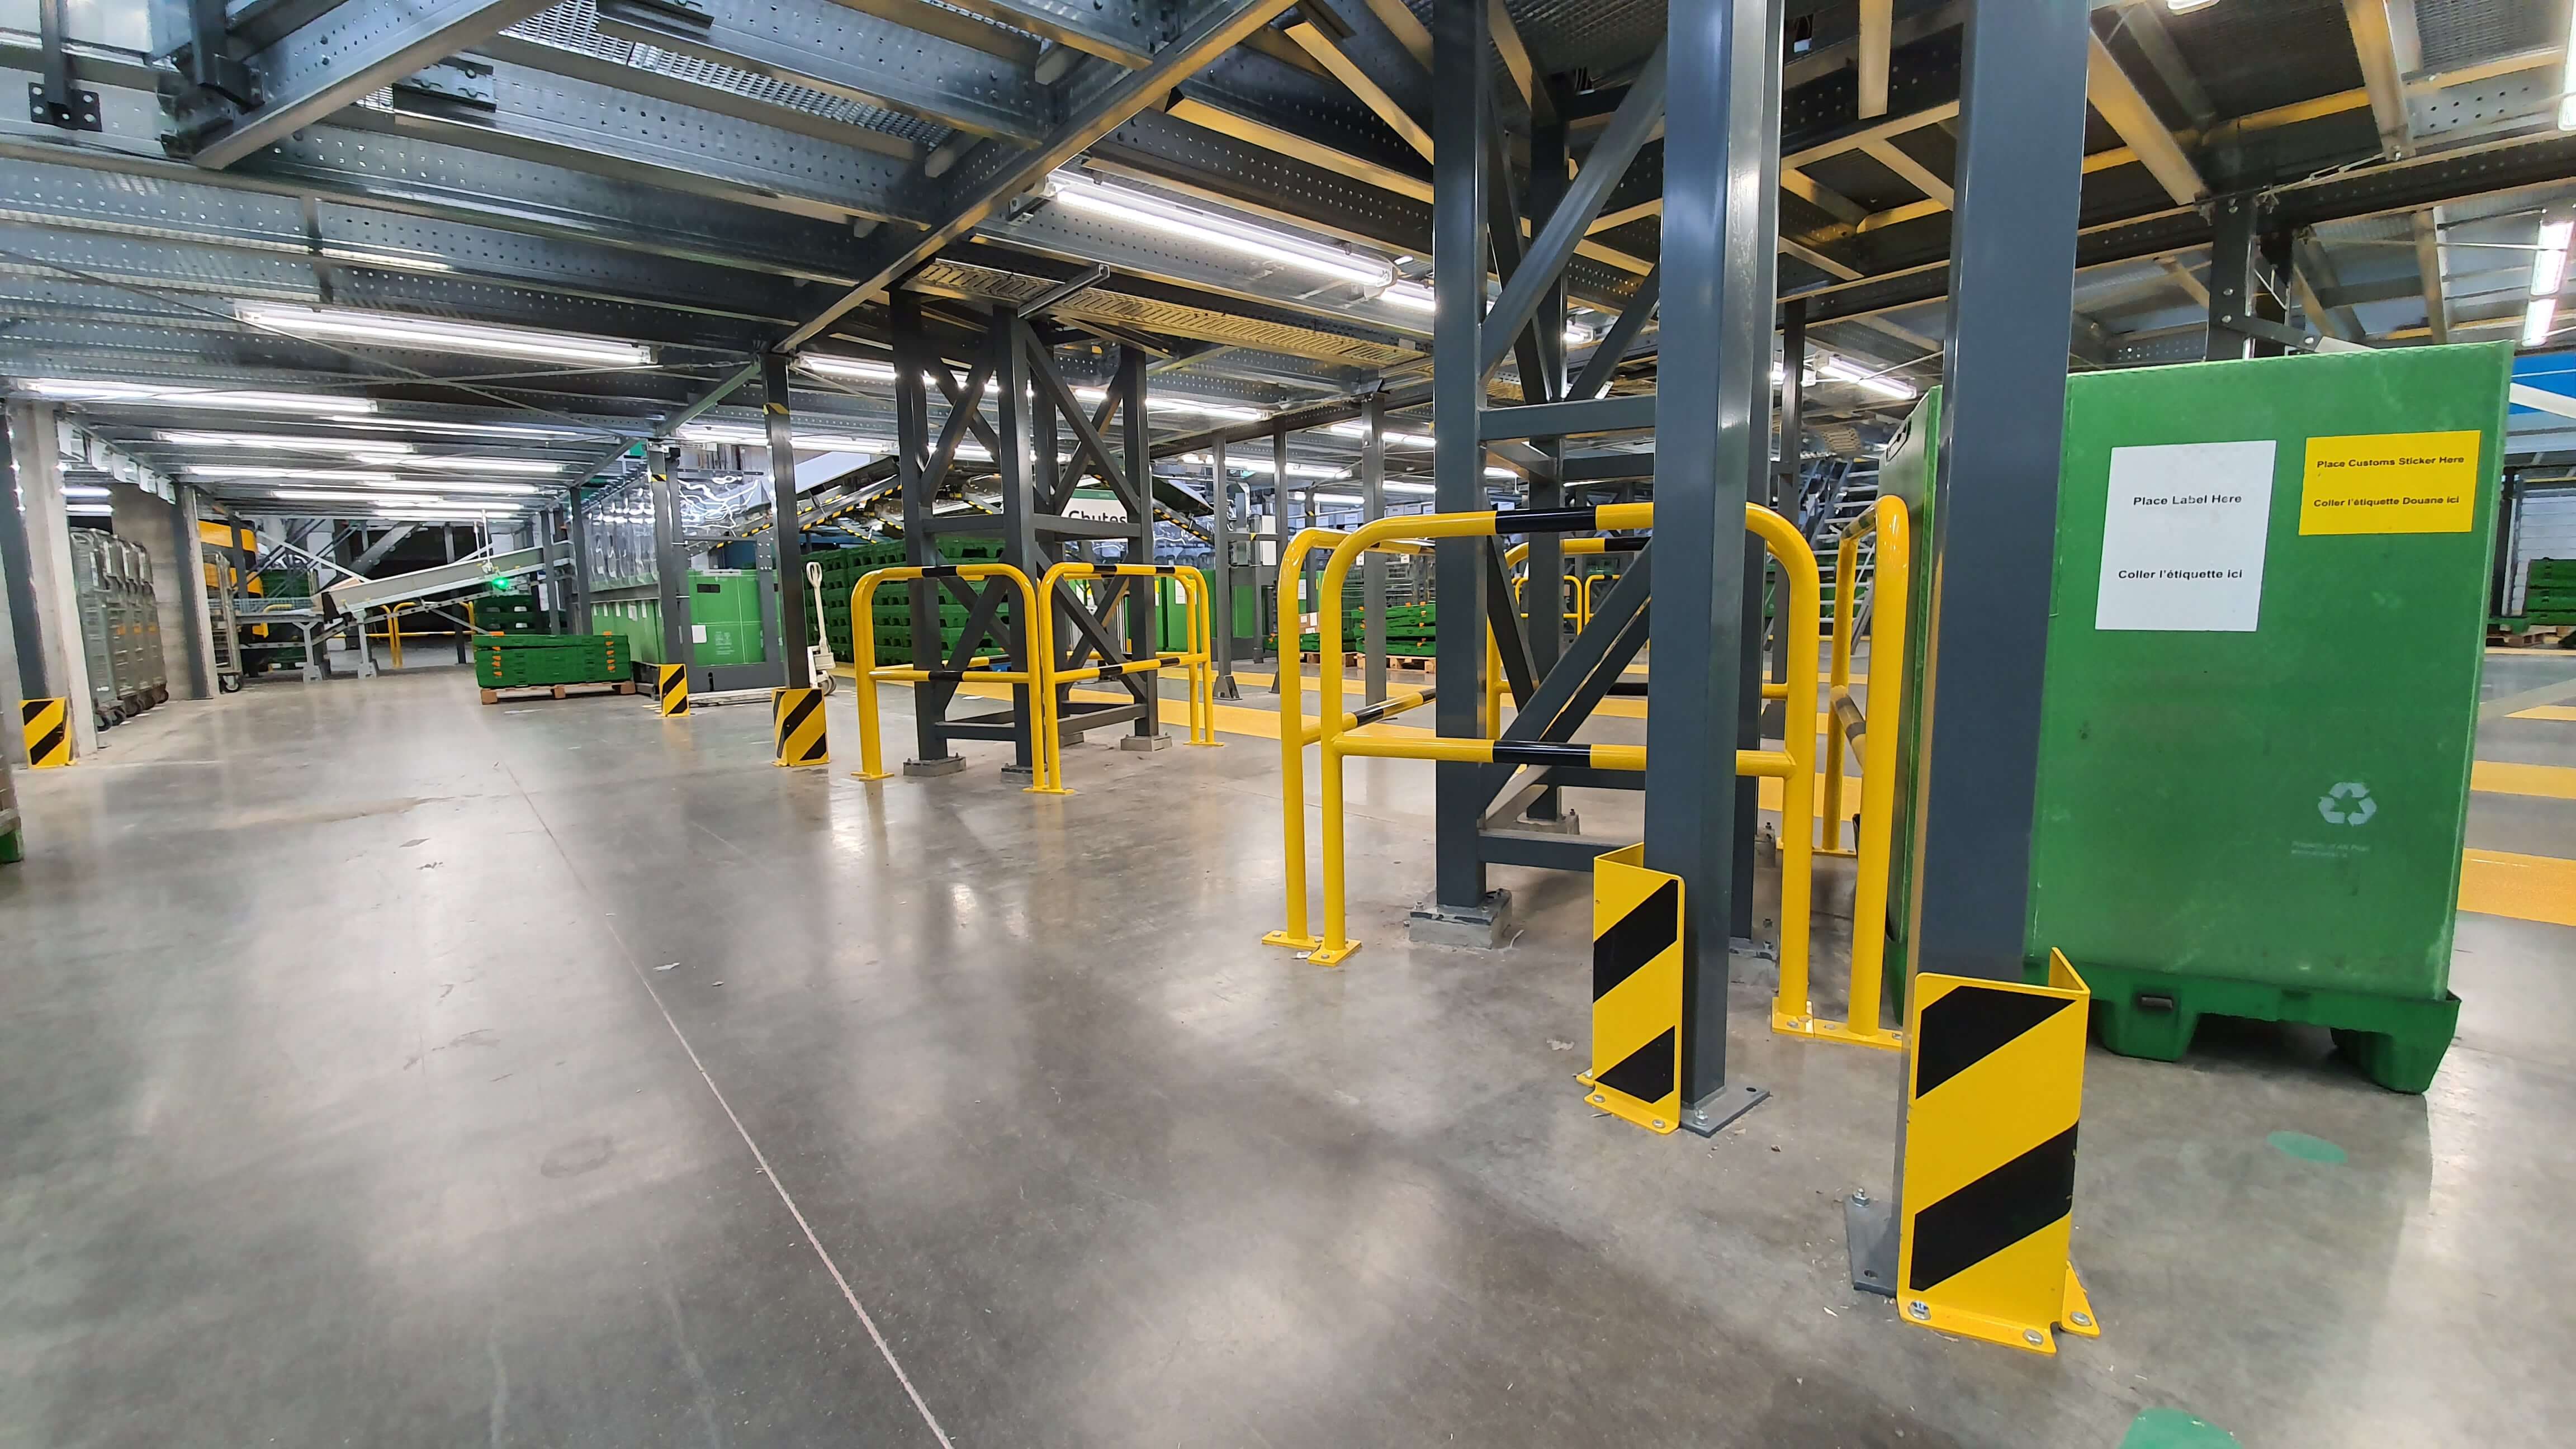 Steel hoop guards protecting columns in warehouse